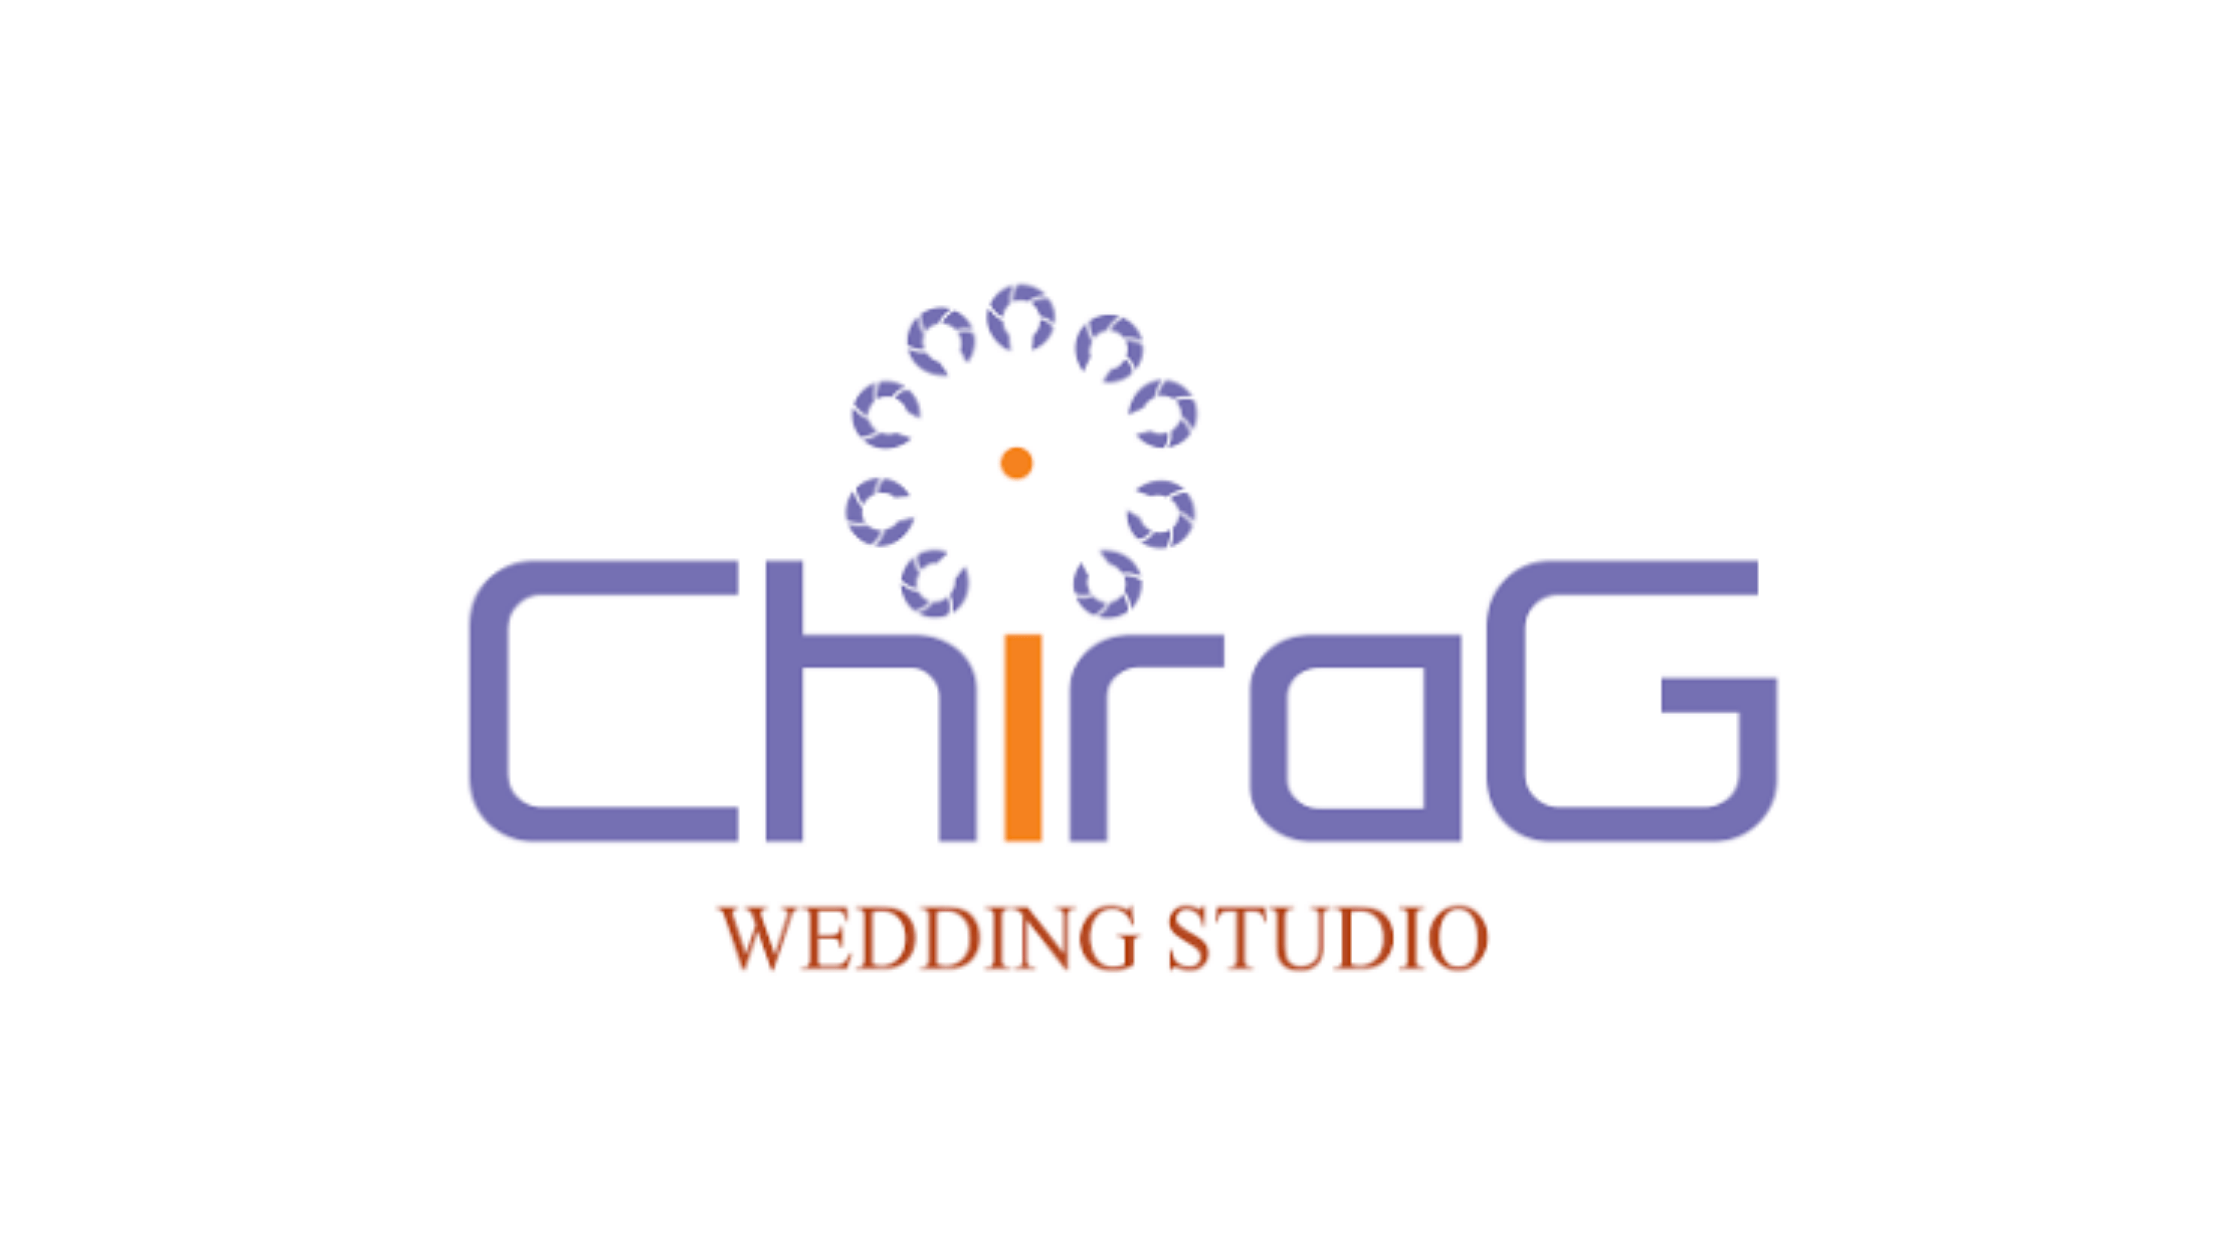 Chirag Wedding Studio